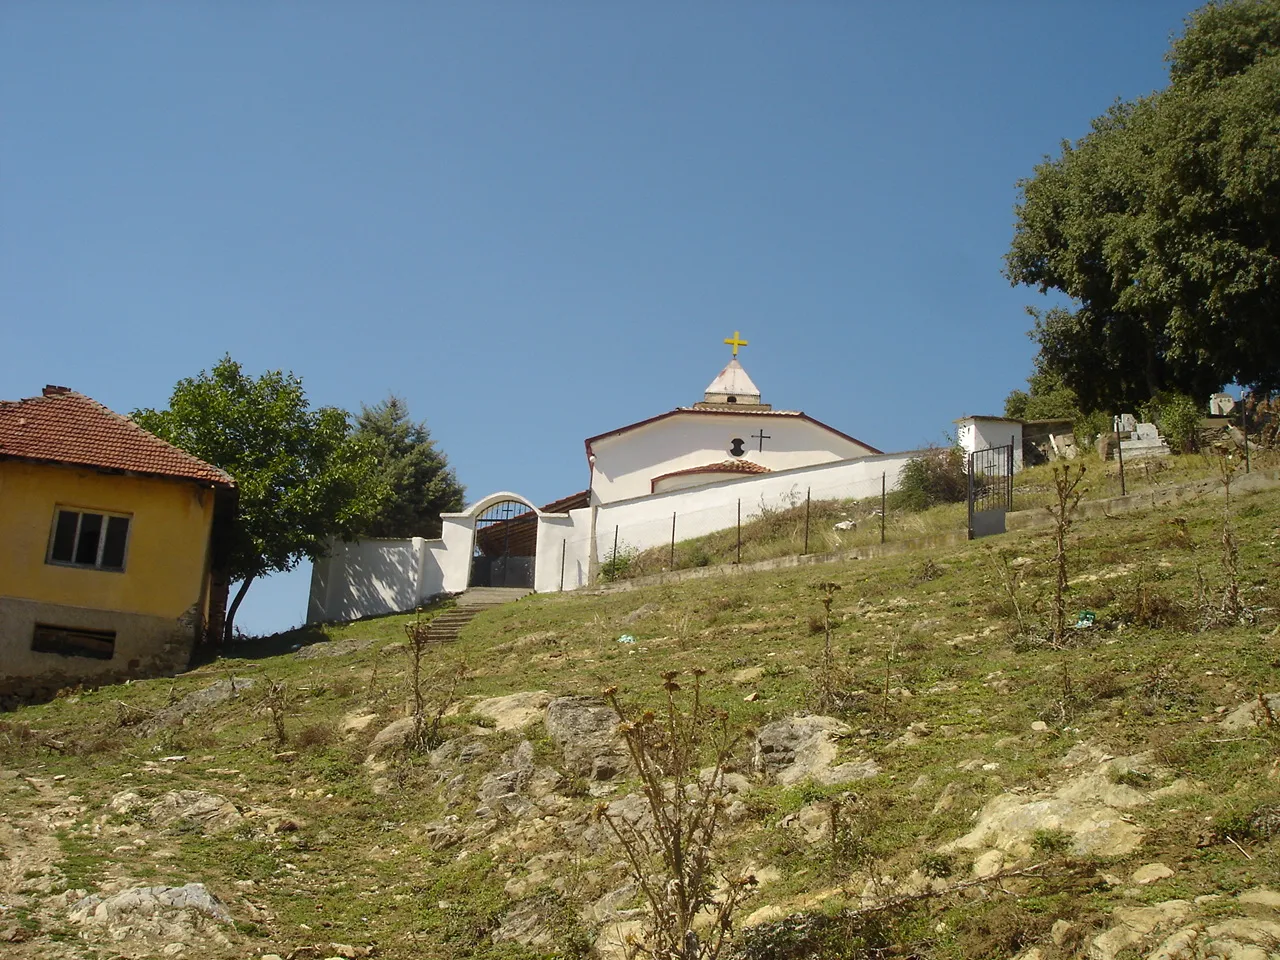 Photo showing: Village of Popchevo, near Strumica, Macedonia